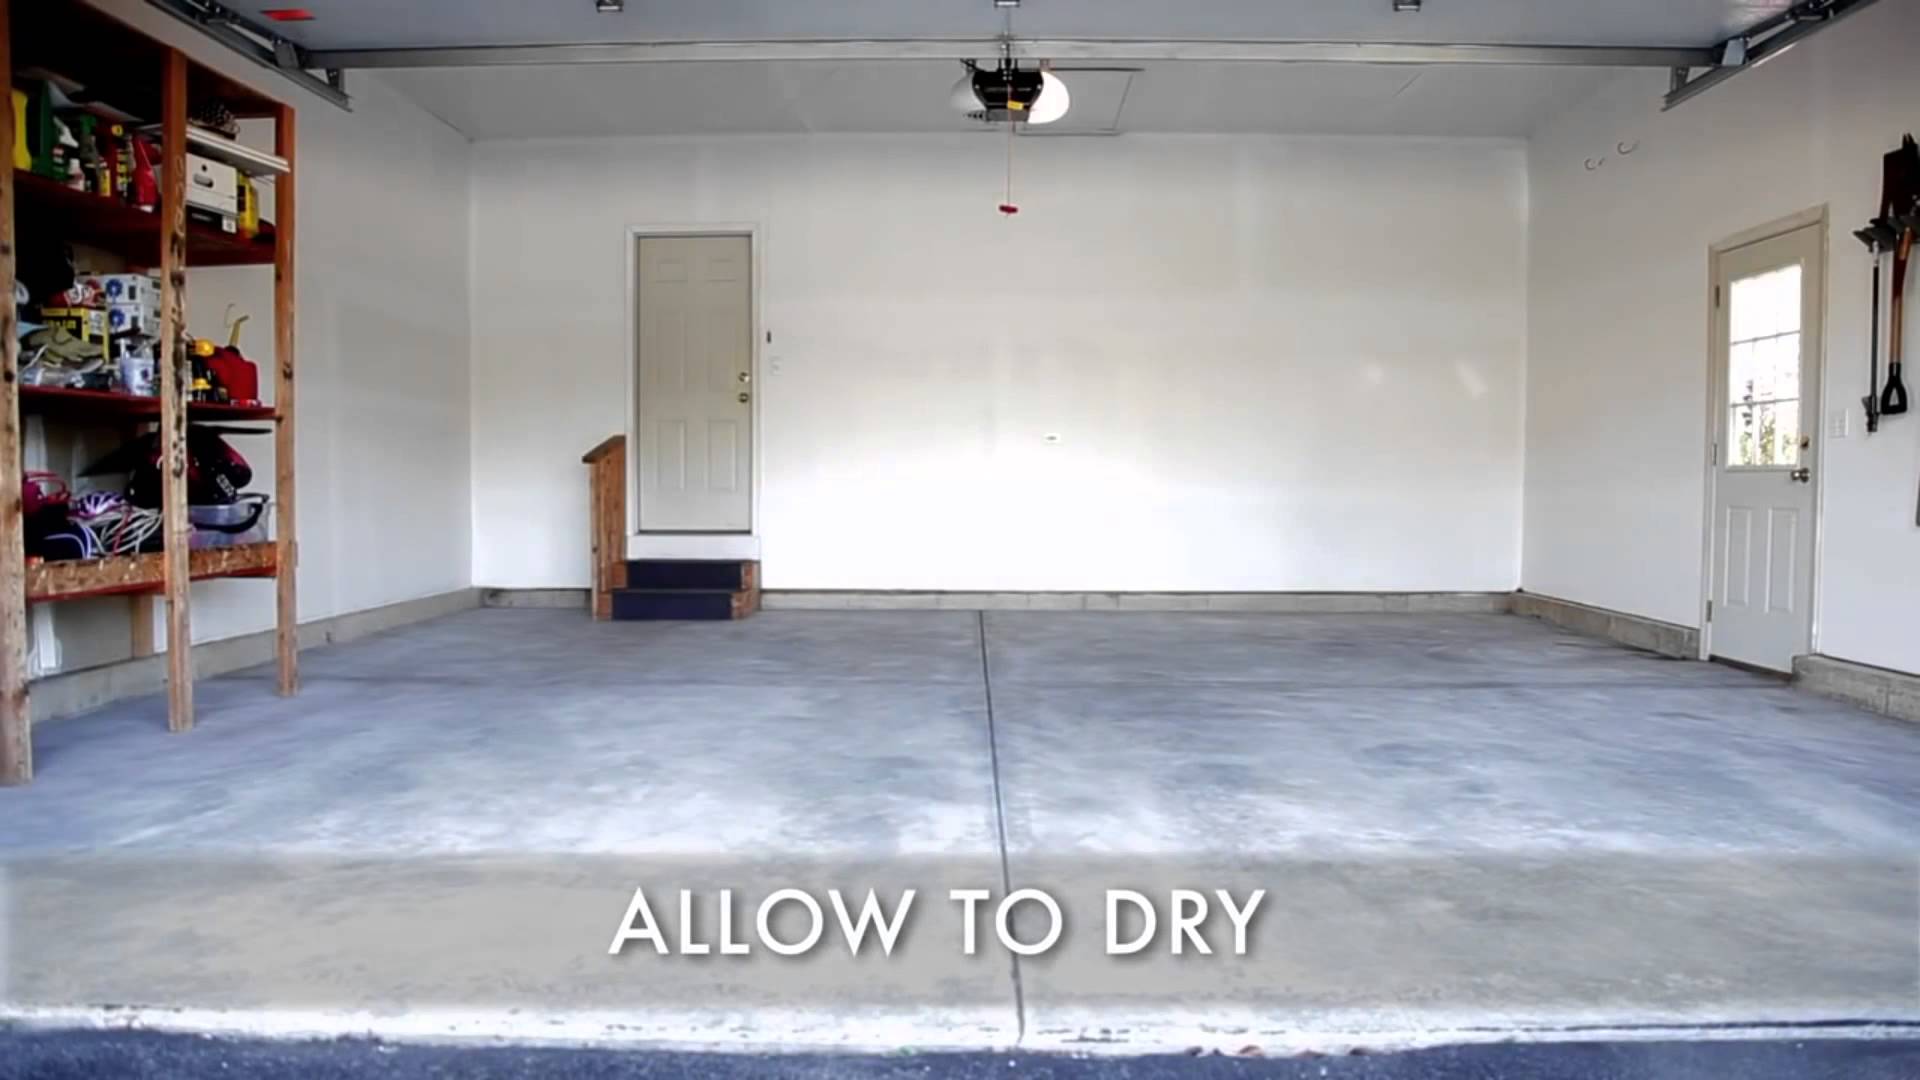 How to Use Rust Oleum Epoxyshield Garage Floor Coating Kit to ...